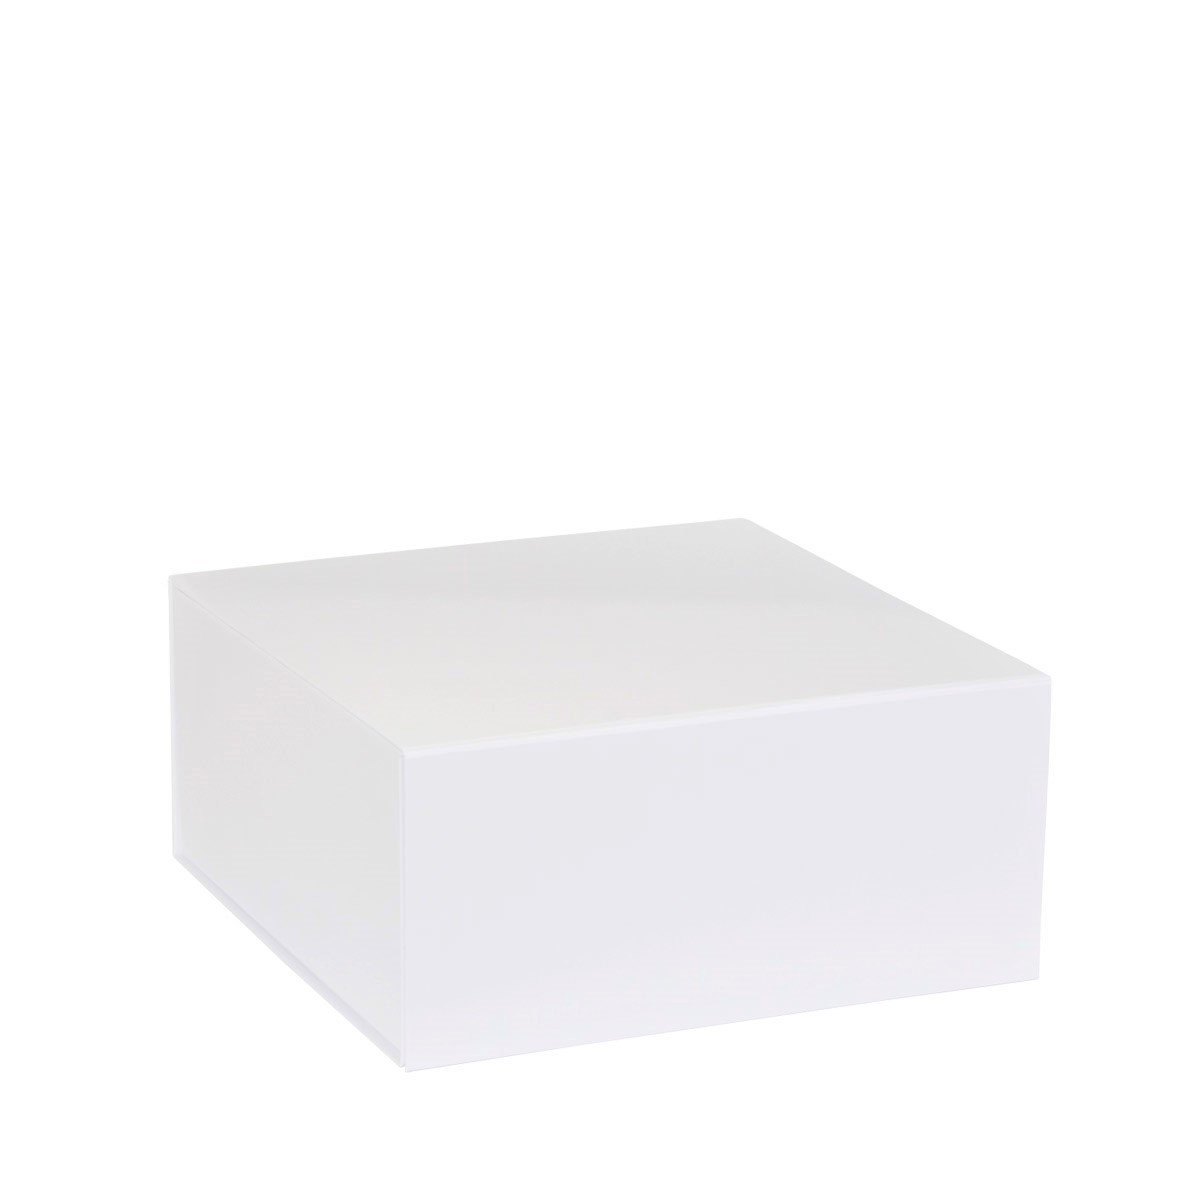 Boîte de luxe ultra plate, aimantée, en carton noir mat 40 cm